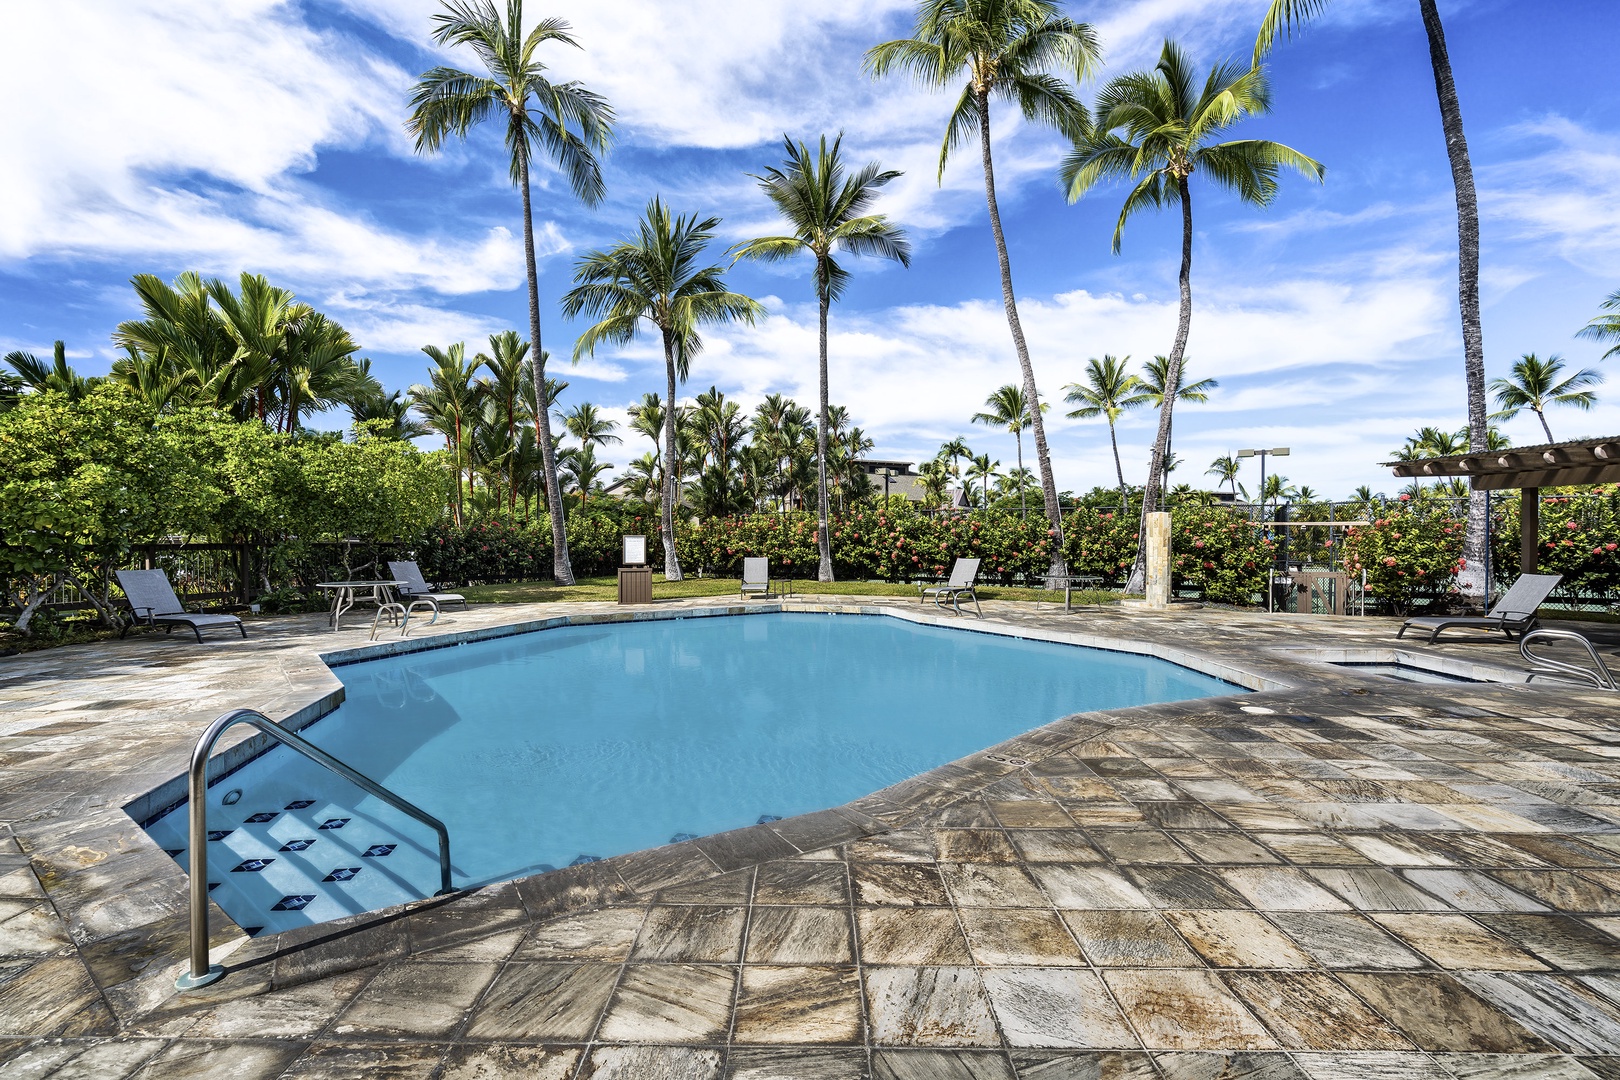 Kailua Kona Vacation Rentals, Kanaloa at Kona 3304 - Seating around the pool with ample spacing